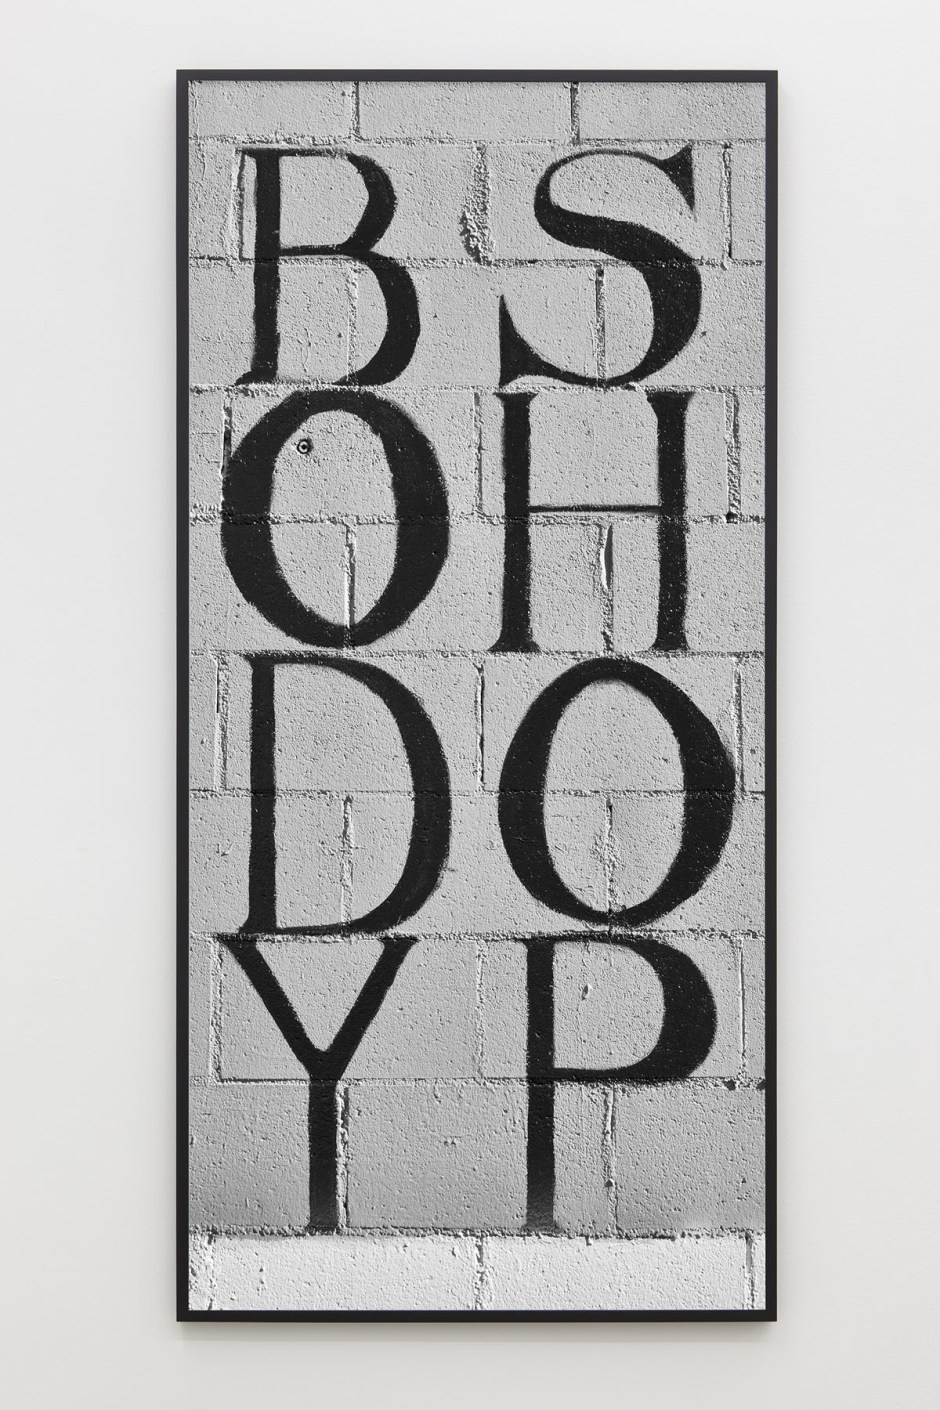 The Body Shop, 2014  archival pigment print  206.2 x 97.0 x 5.5 cm 81 1/8 x 38 3/16 x 2 1/8 in.